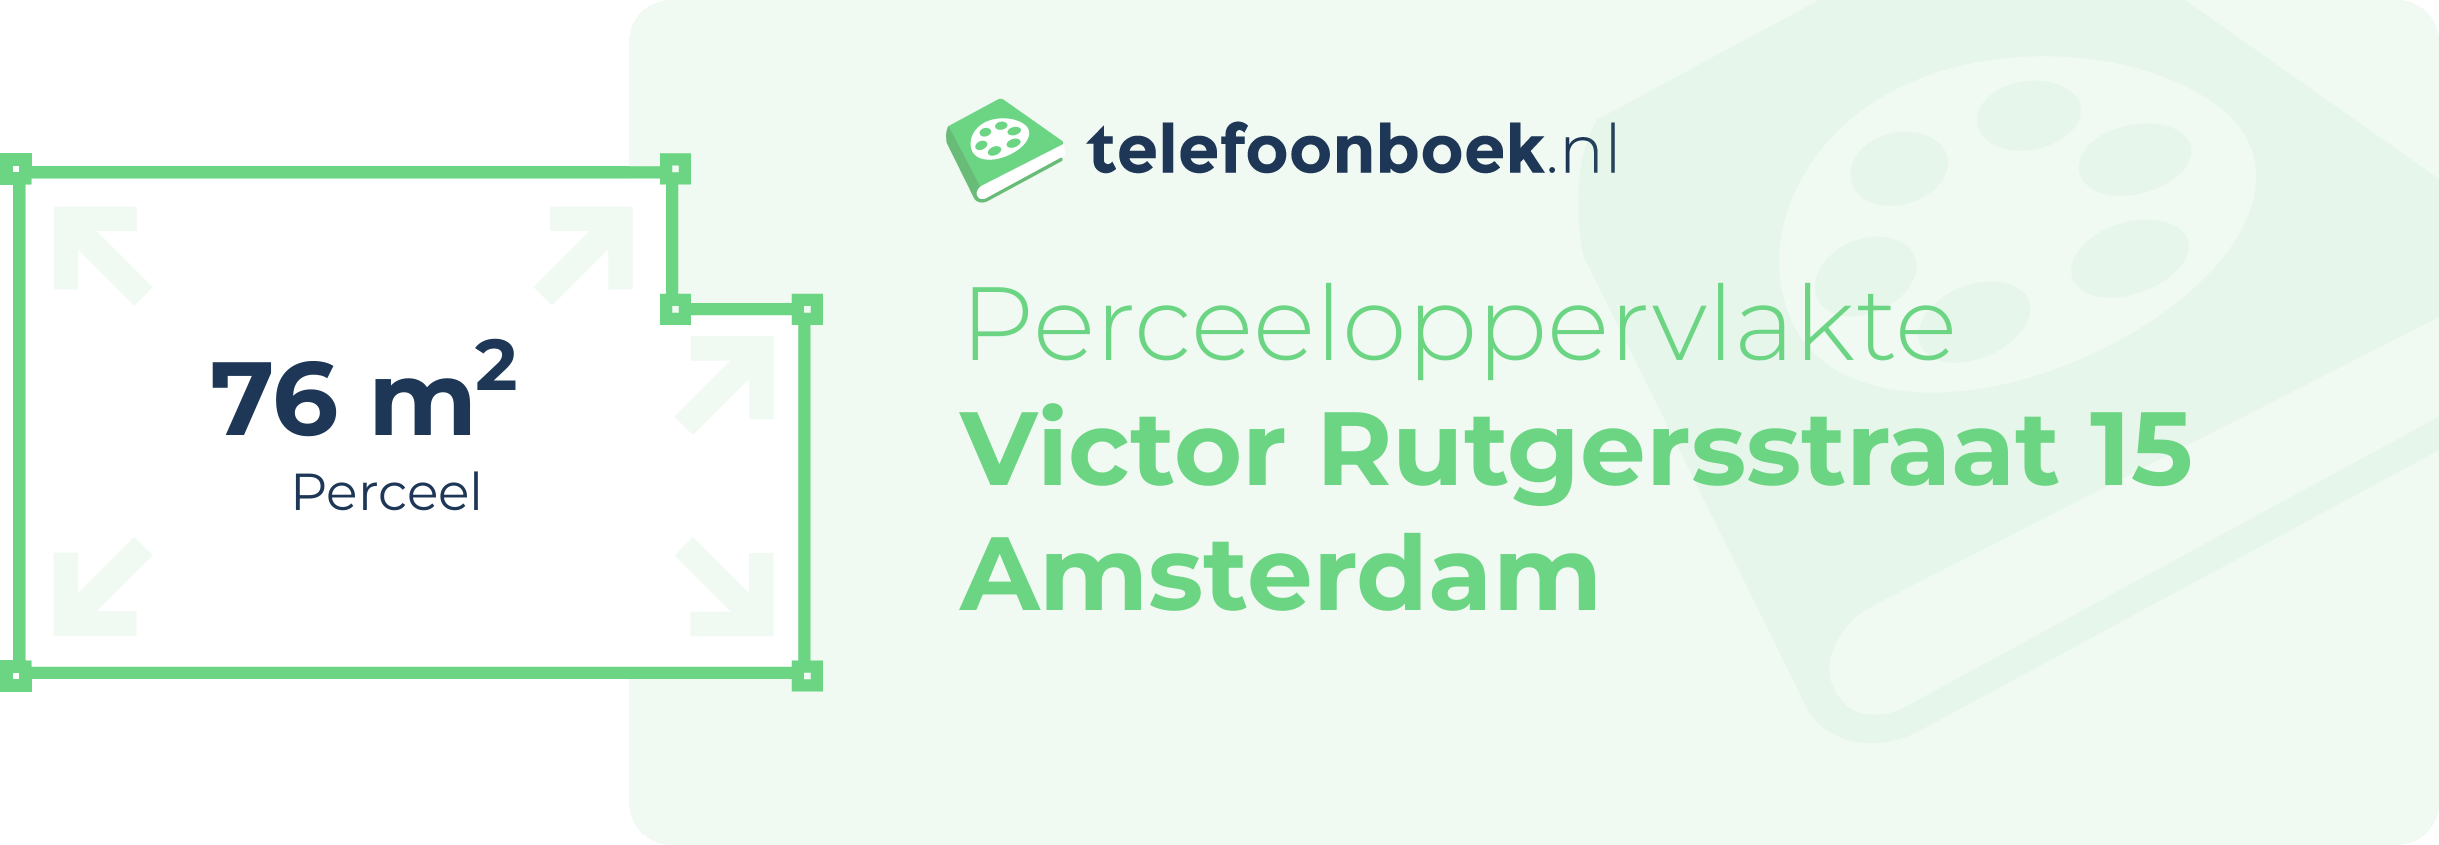 Perceeloppervlakte Victor Rutgersstraat 15 Amsterdam